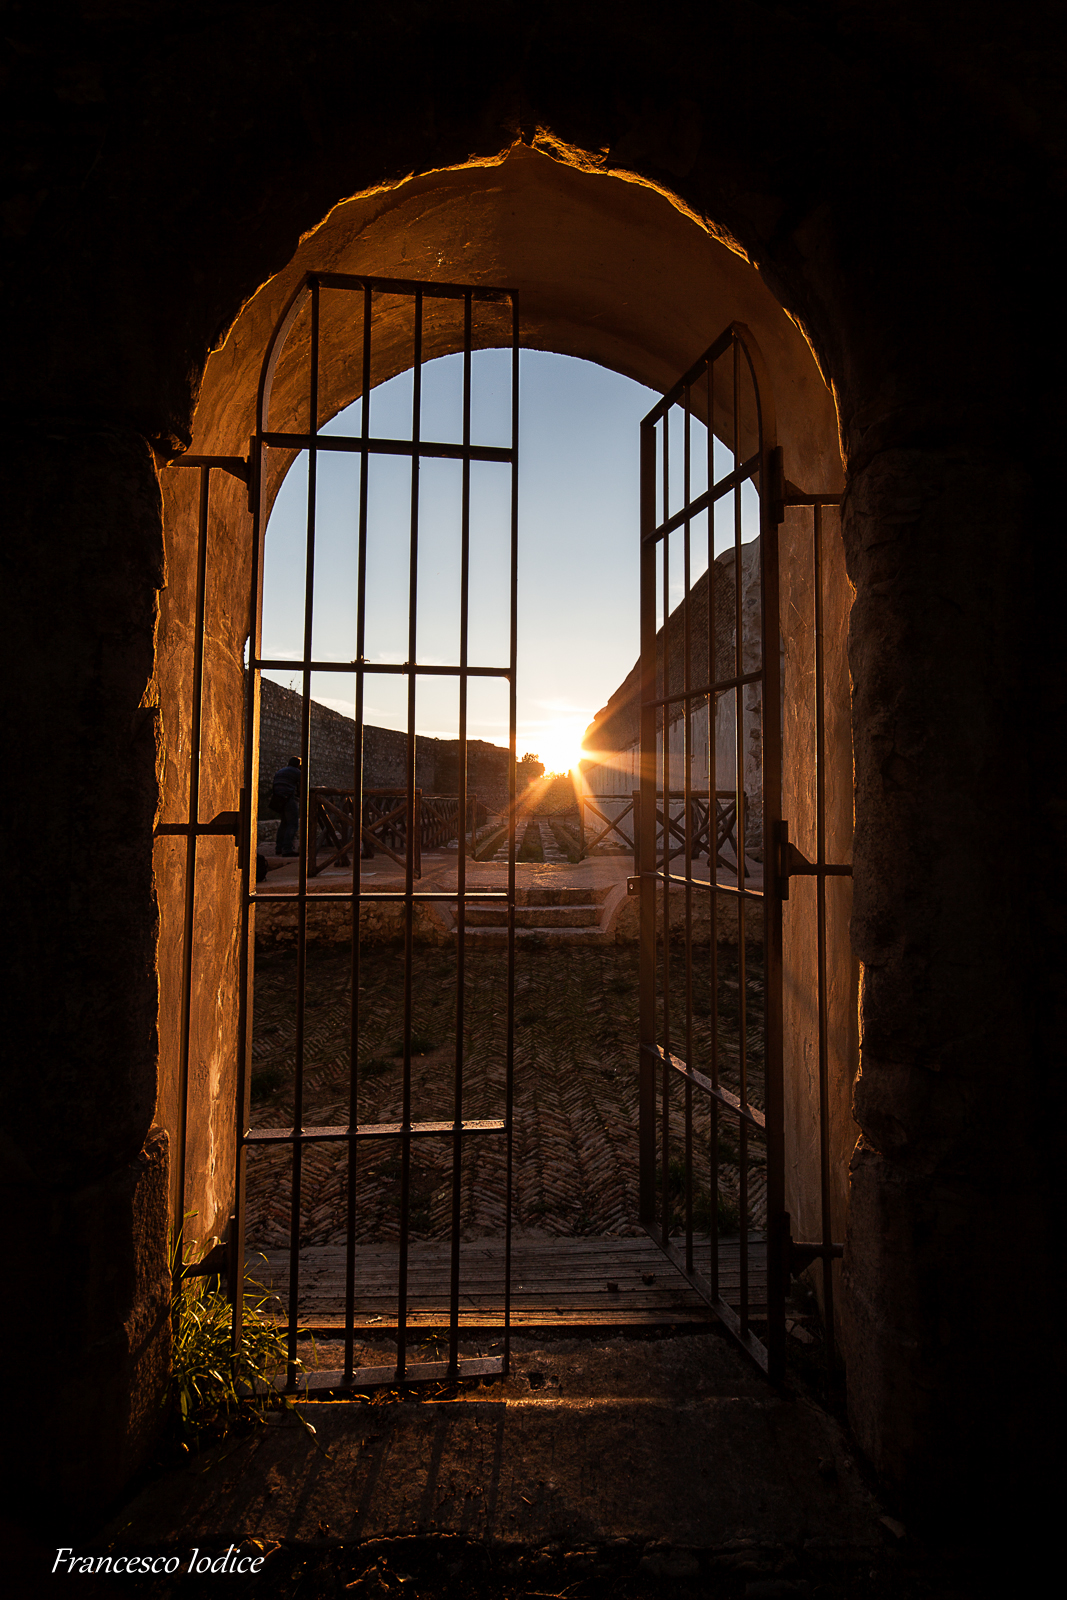 ..cancello opened on sunset...